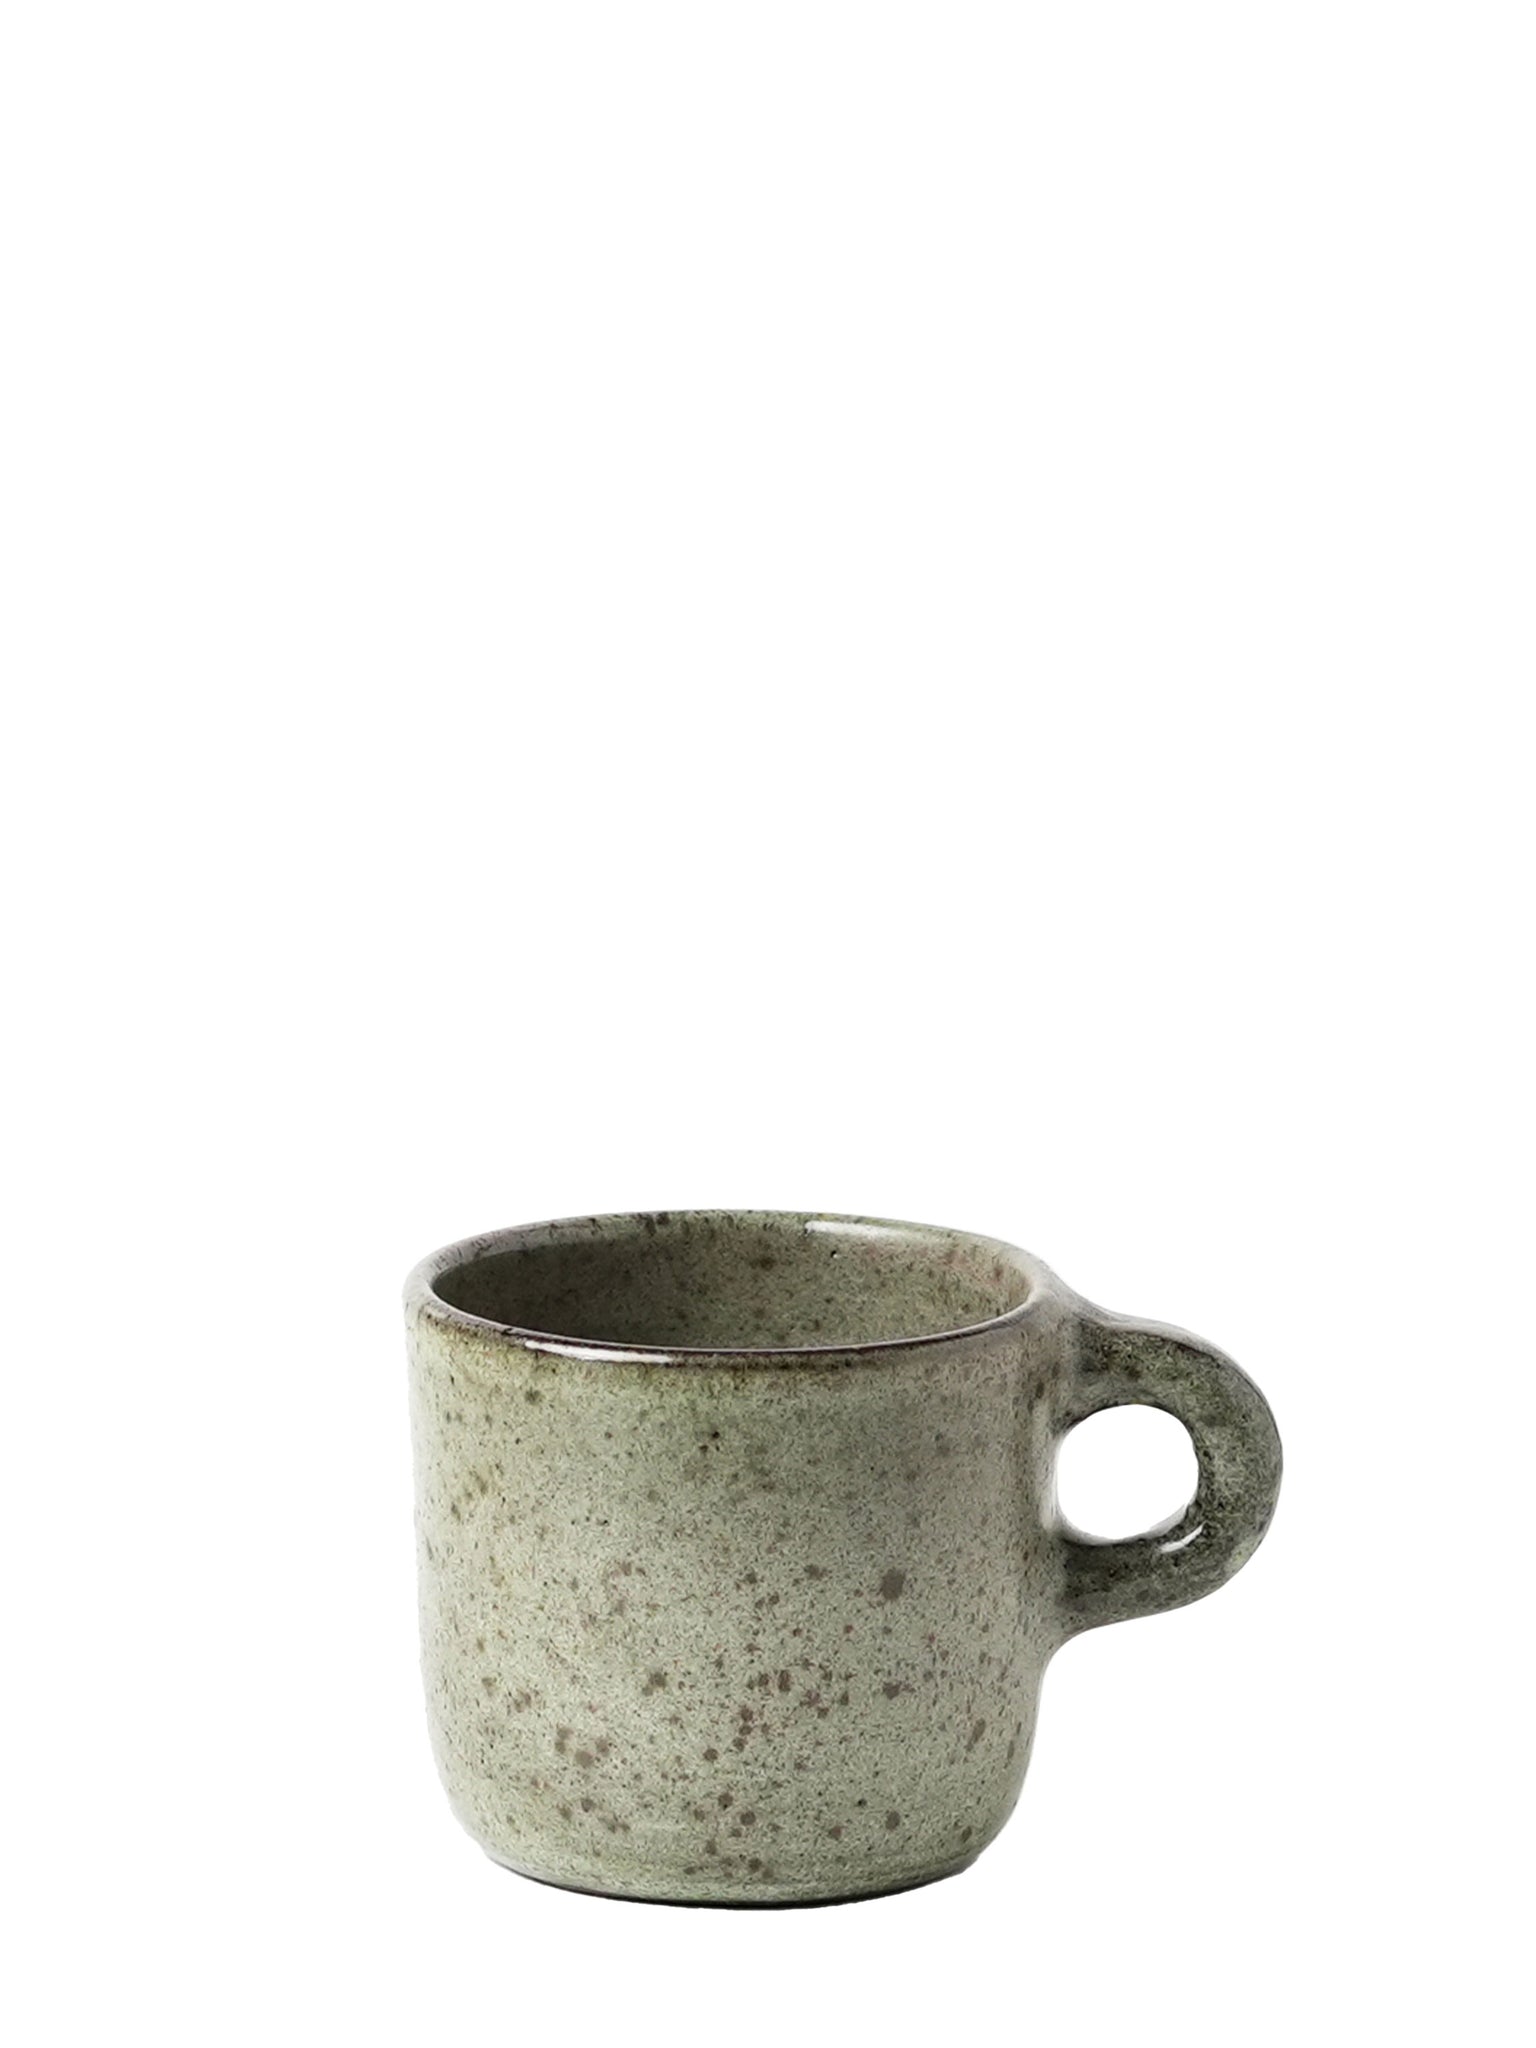 hand thrown ceramic mug in green